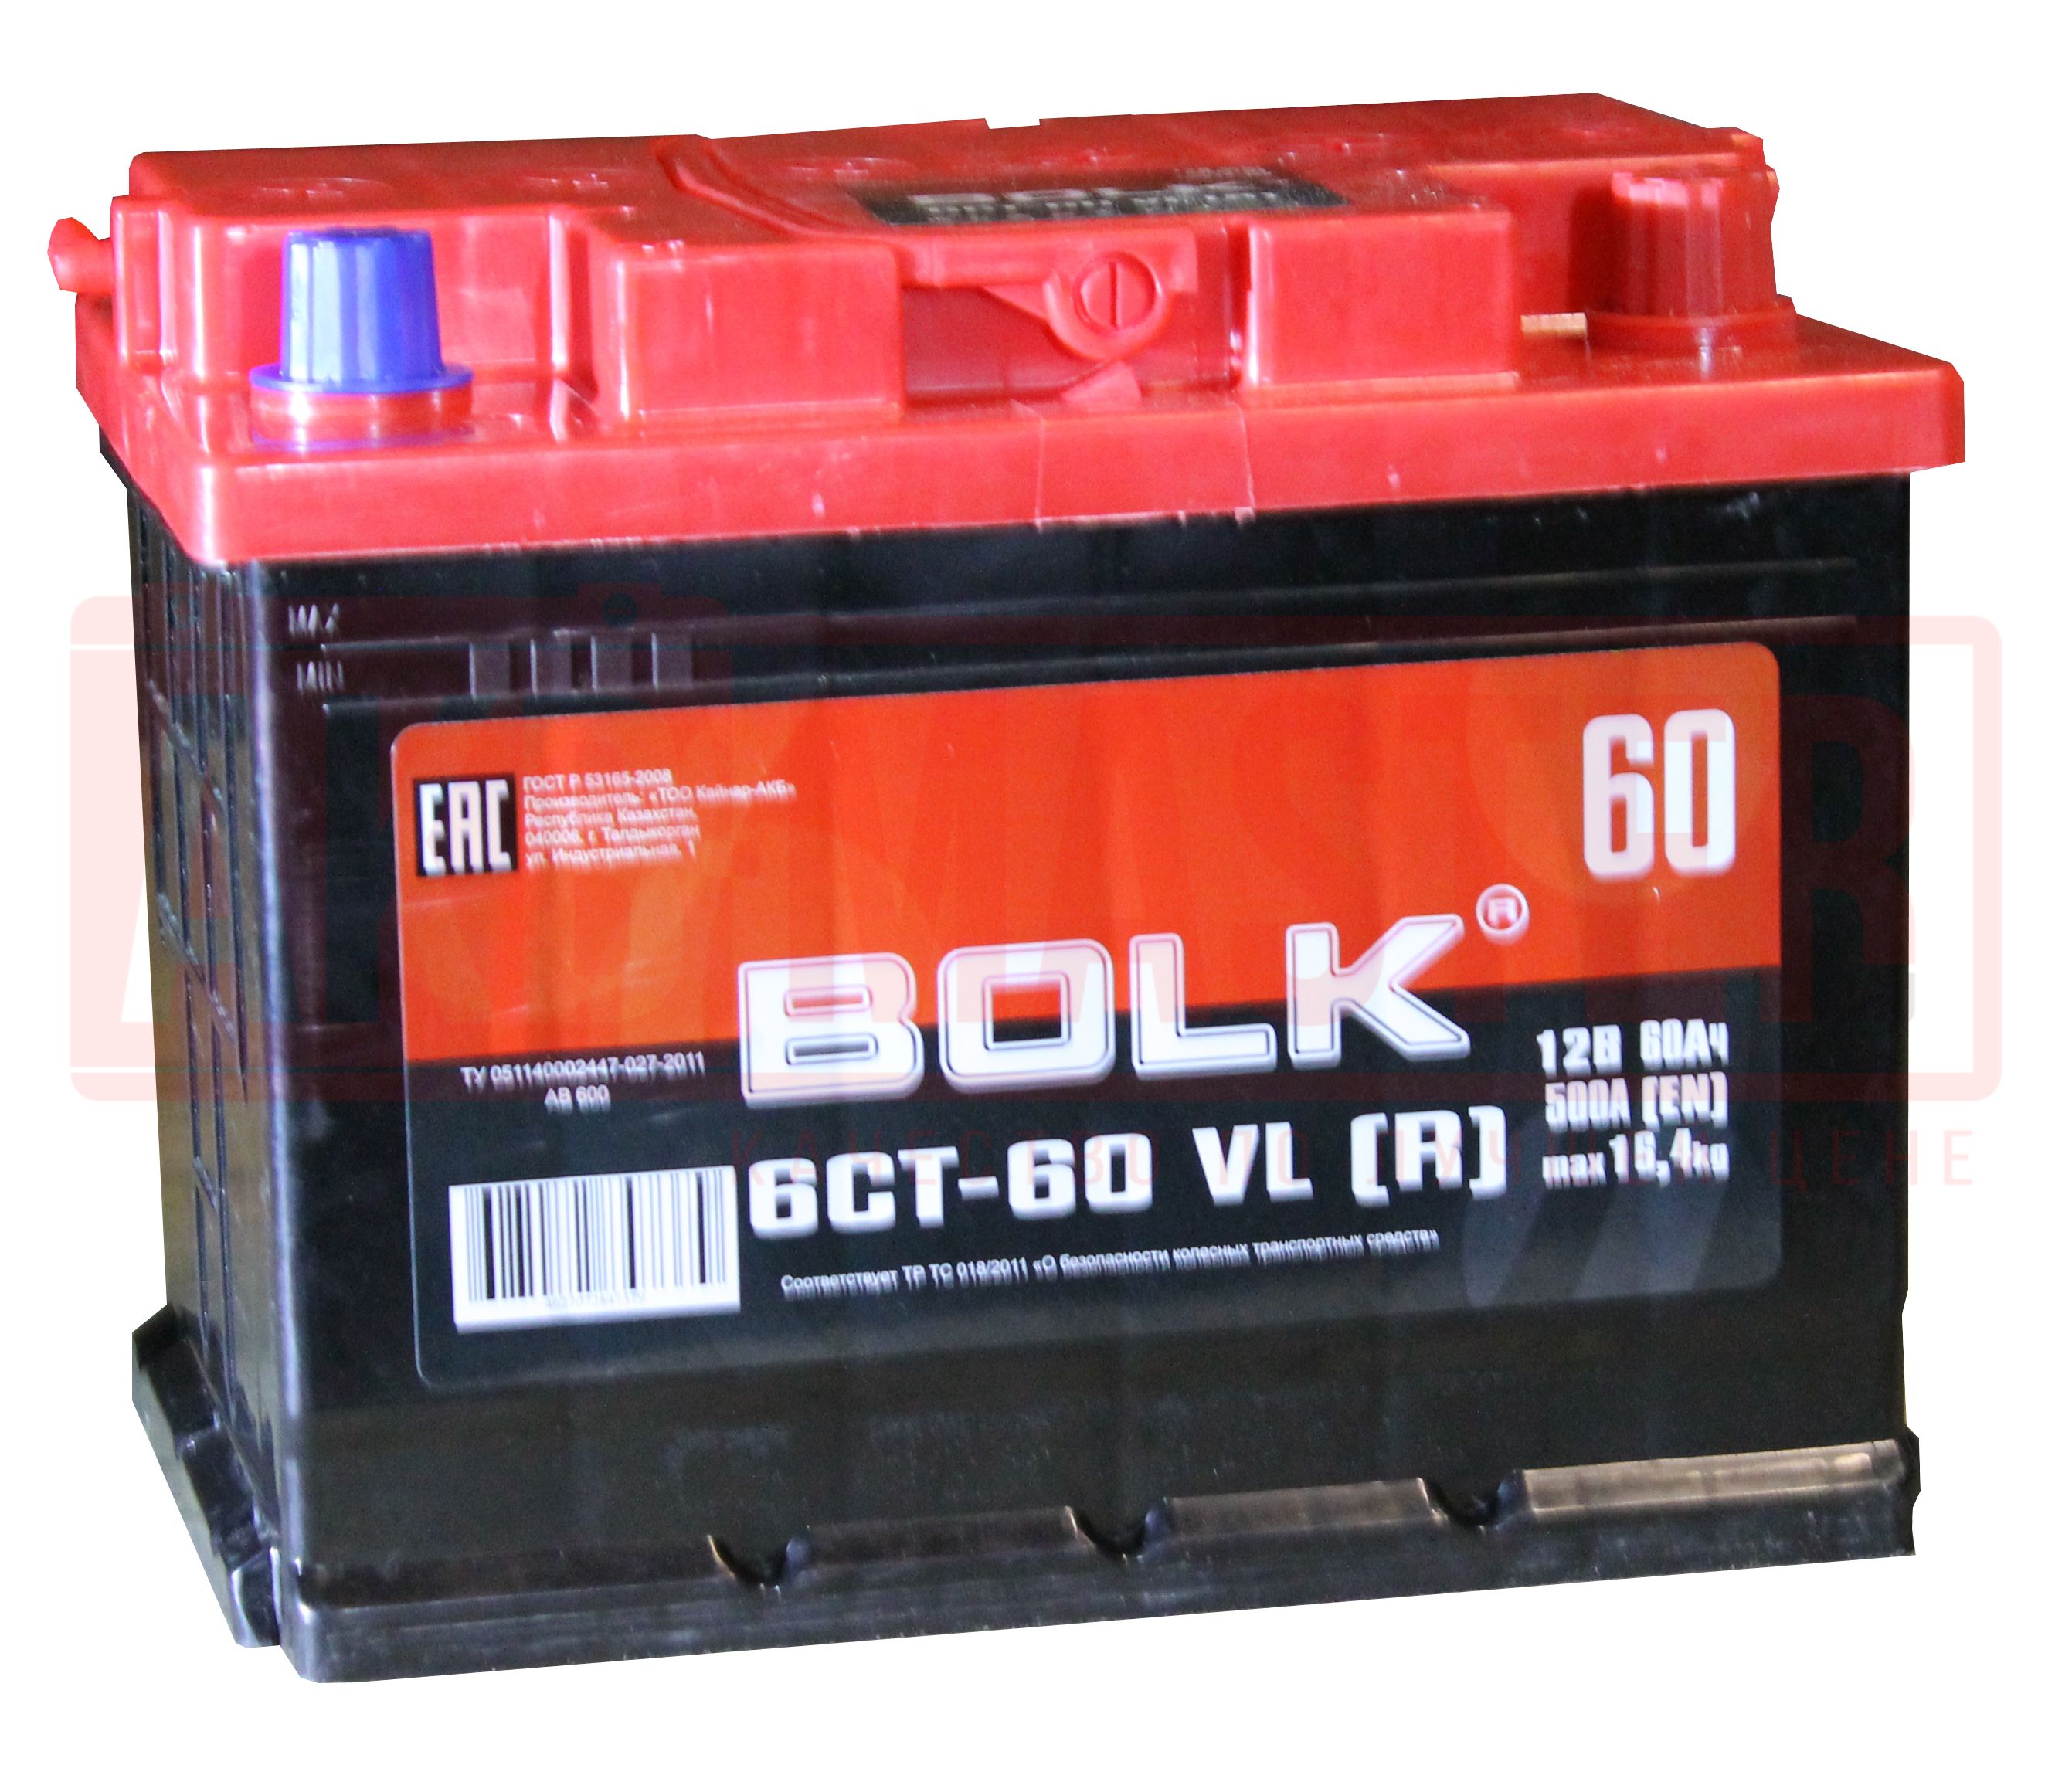 Battery 60. Аккумулятор BOLK 6ct-60 VL. BOLK 6ct-60 VL R. АКБ BOLK 60 А/Ч. Аккумулятор BOLK Asia 50.